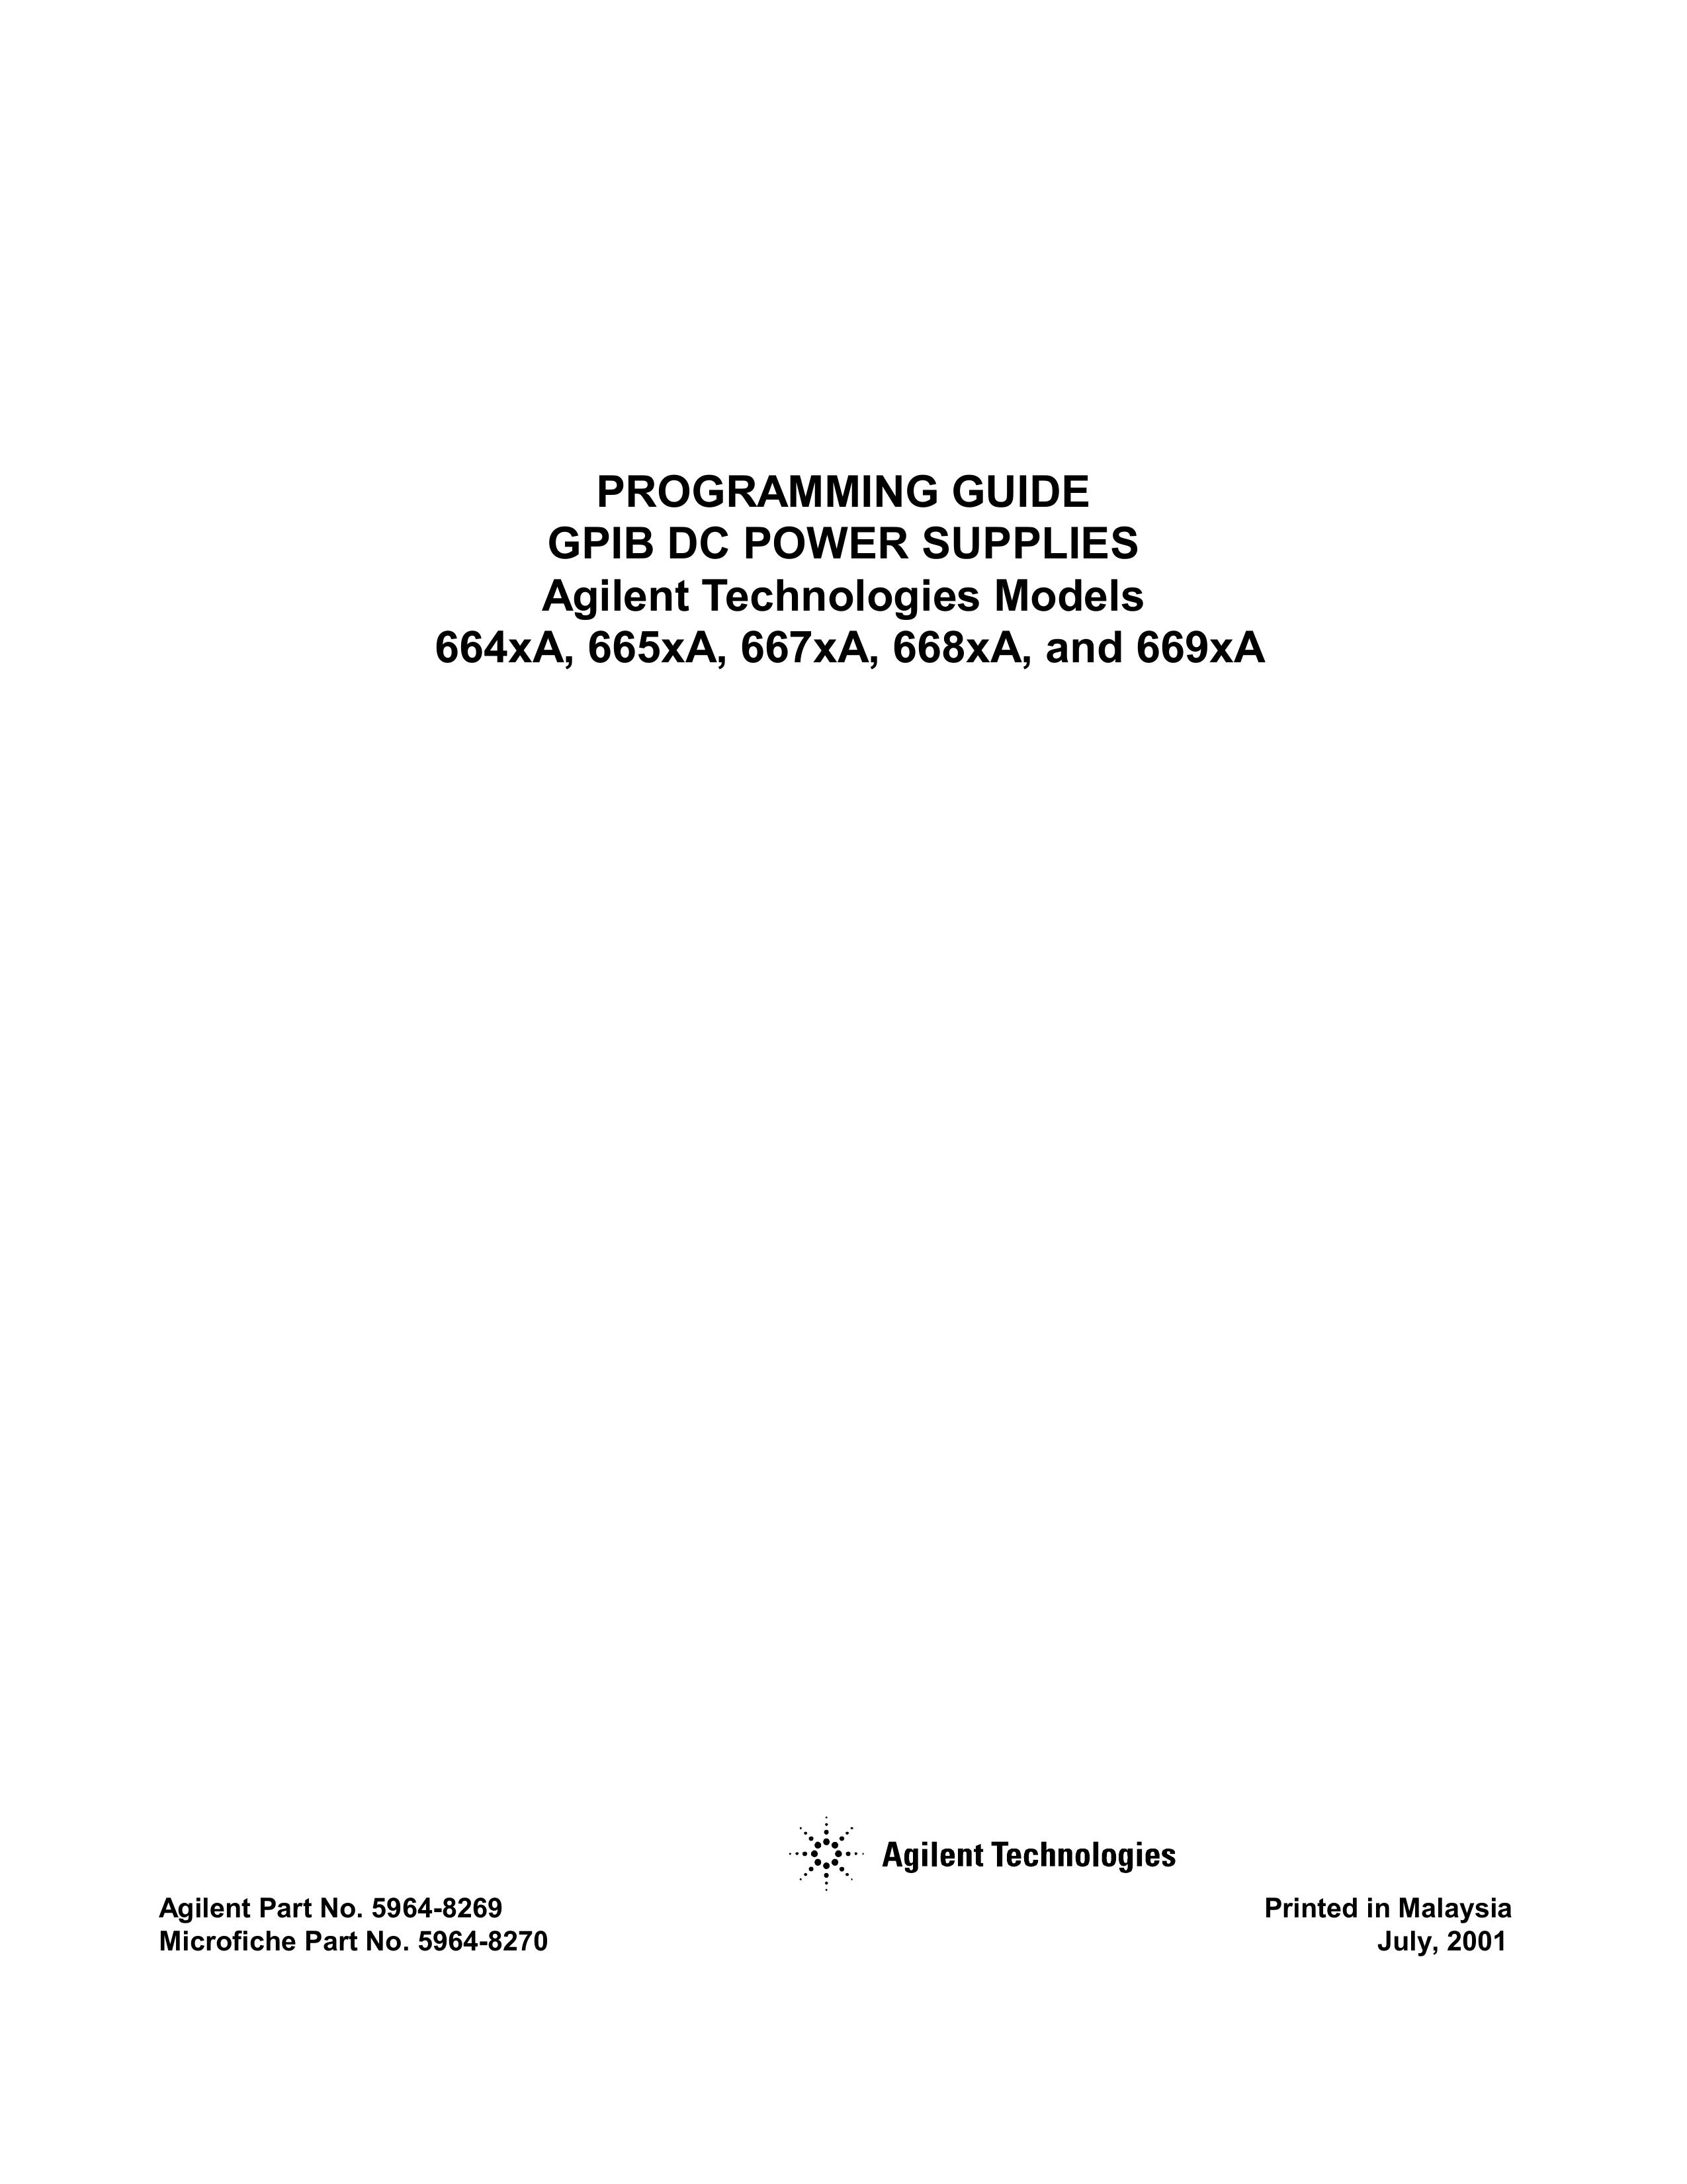 Agilent Technologies 665xA Portable Generator User Manual